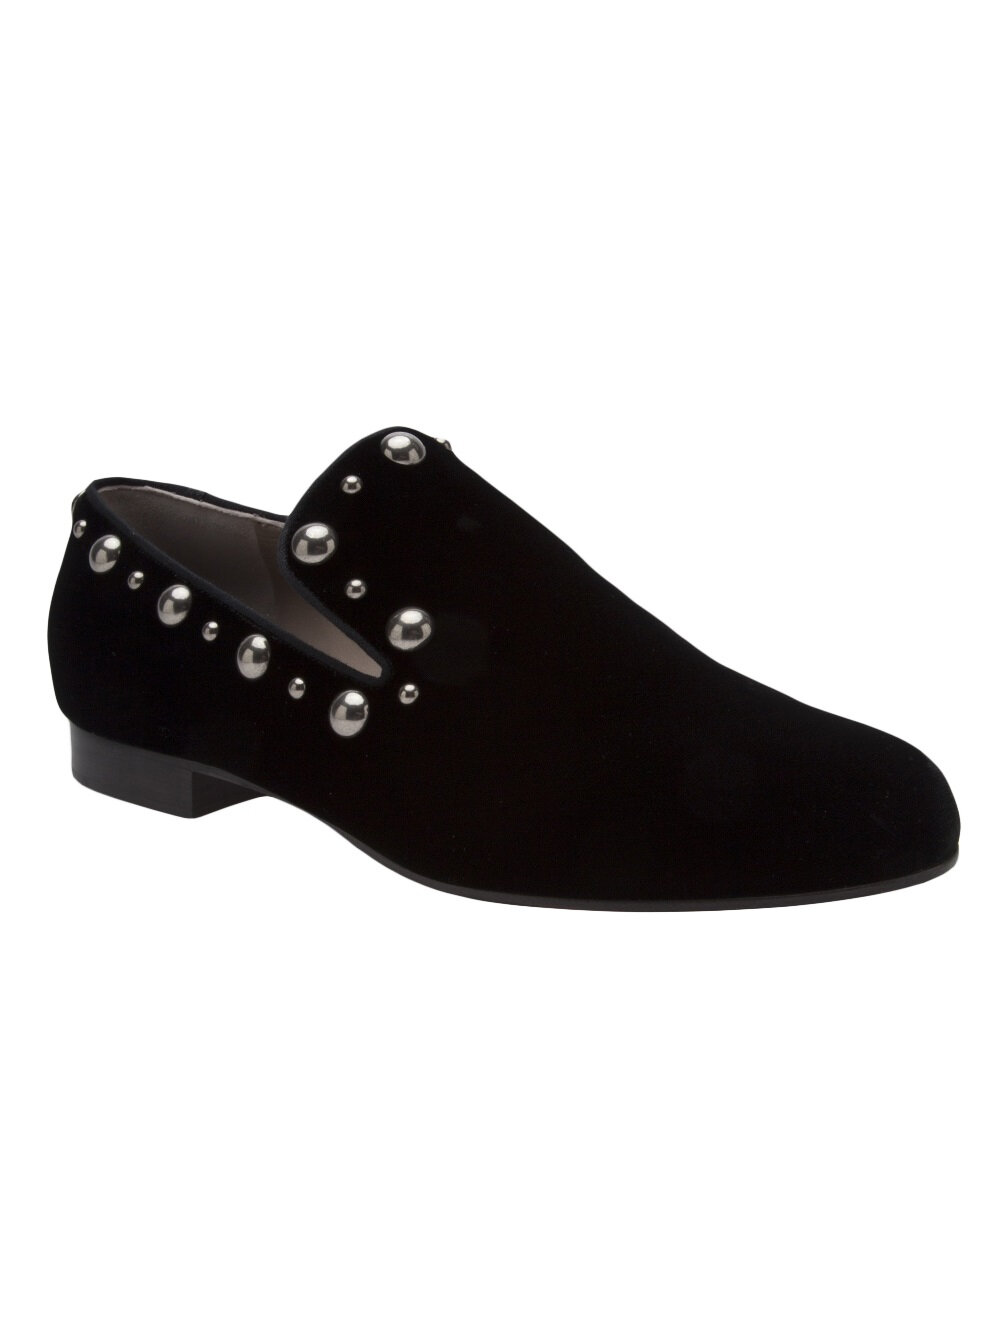 marc-jacobs-black-studded-slipper-product-1-14237846-0-775497781-normal.jpeg